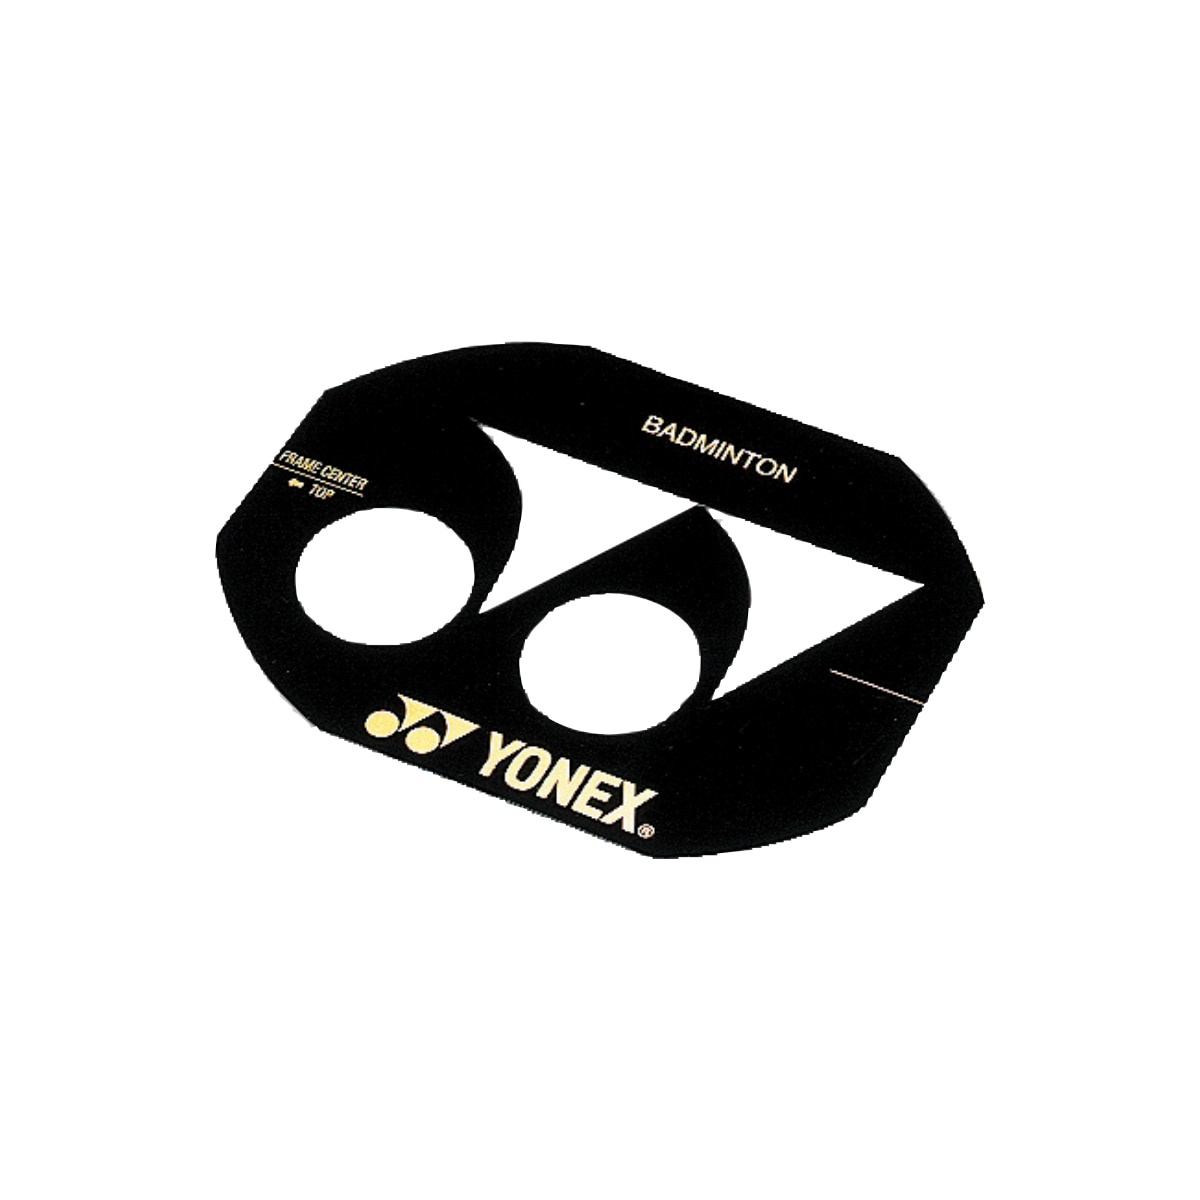 YONEX Logoschablone für Badminton